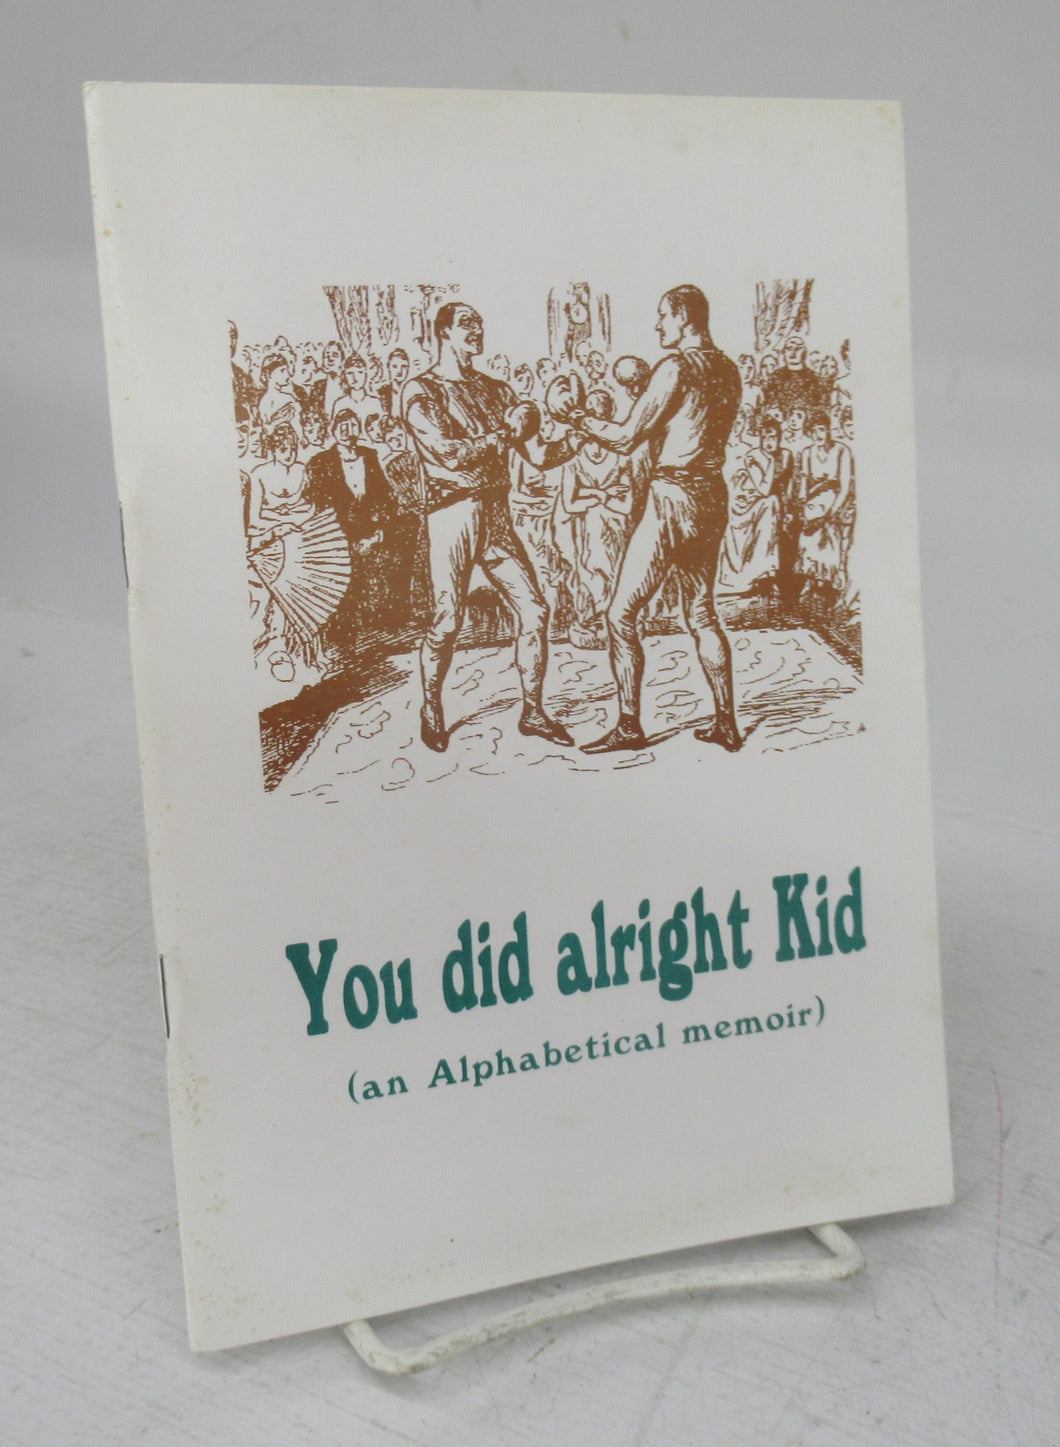 You did alright Kid (an Alphabetical memoir)